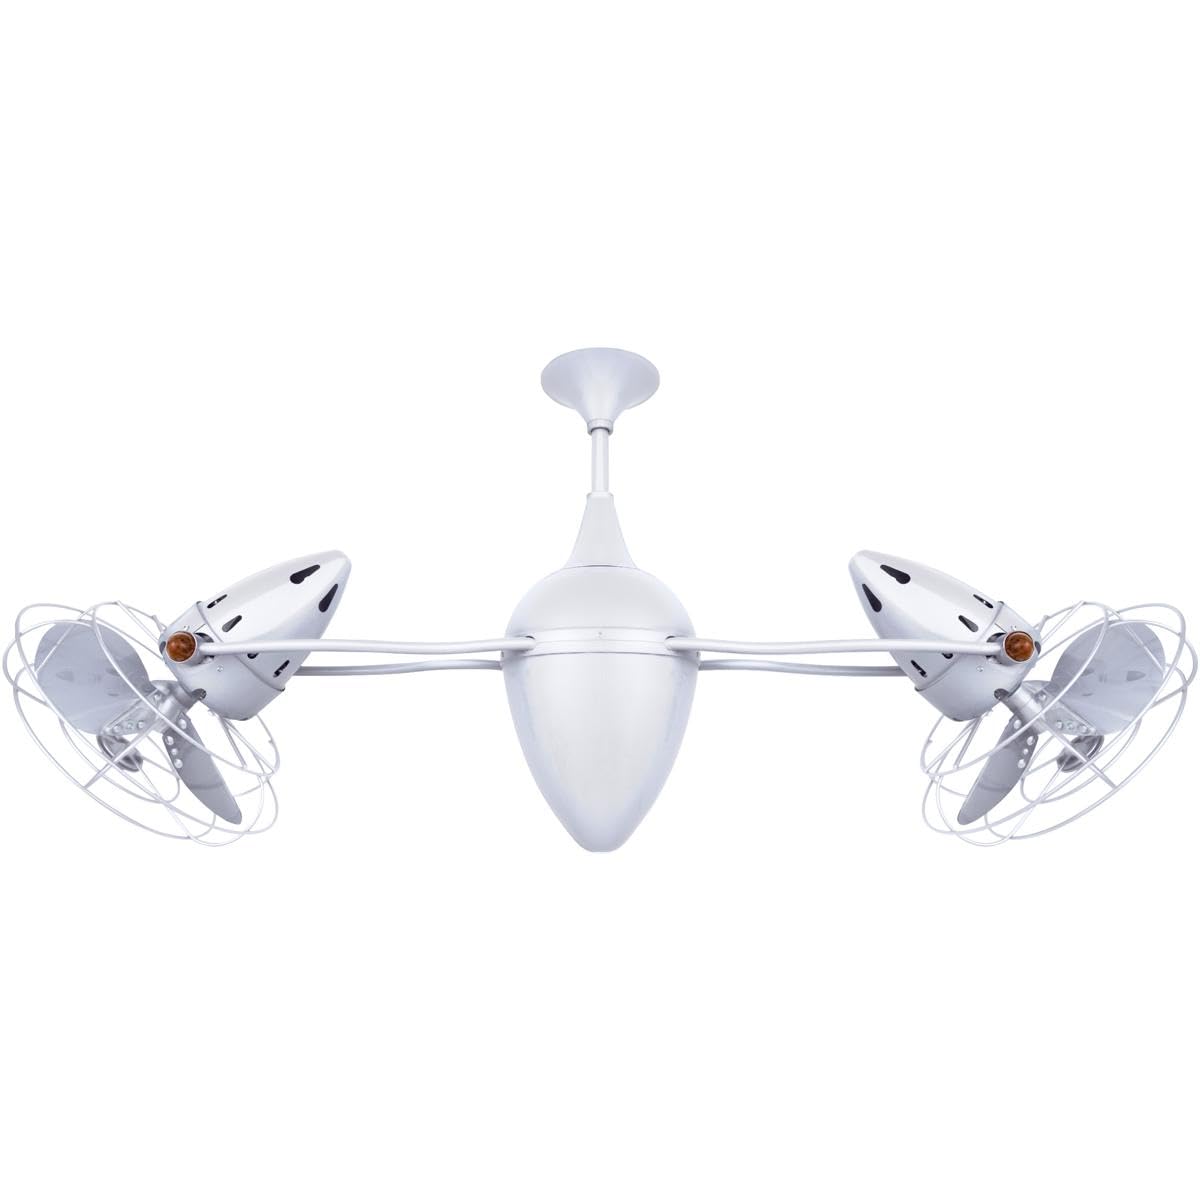 Matthews Fan AR-WH-MTL Ar Ruthiane 360° dual headed rotational ceiling fan in gloss white finish with metal blades.